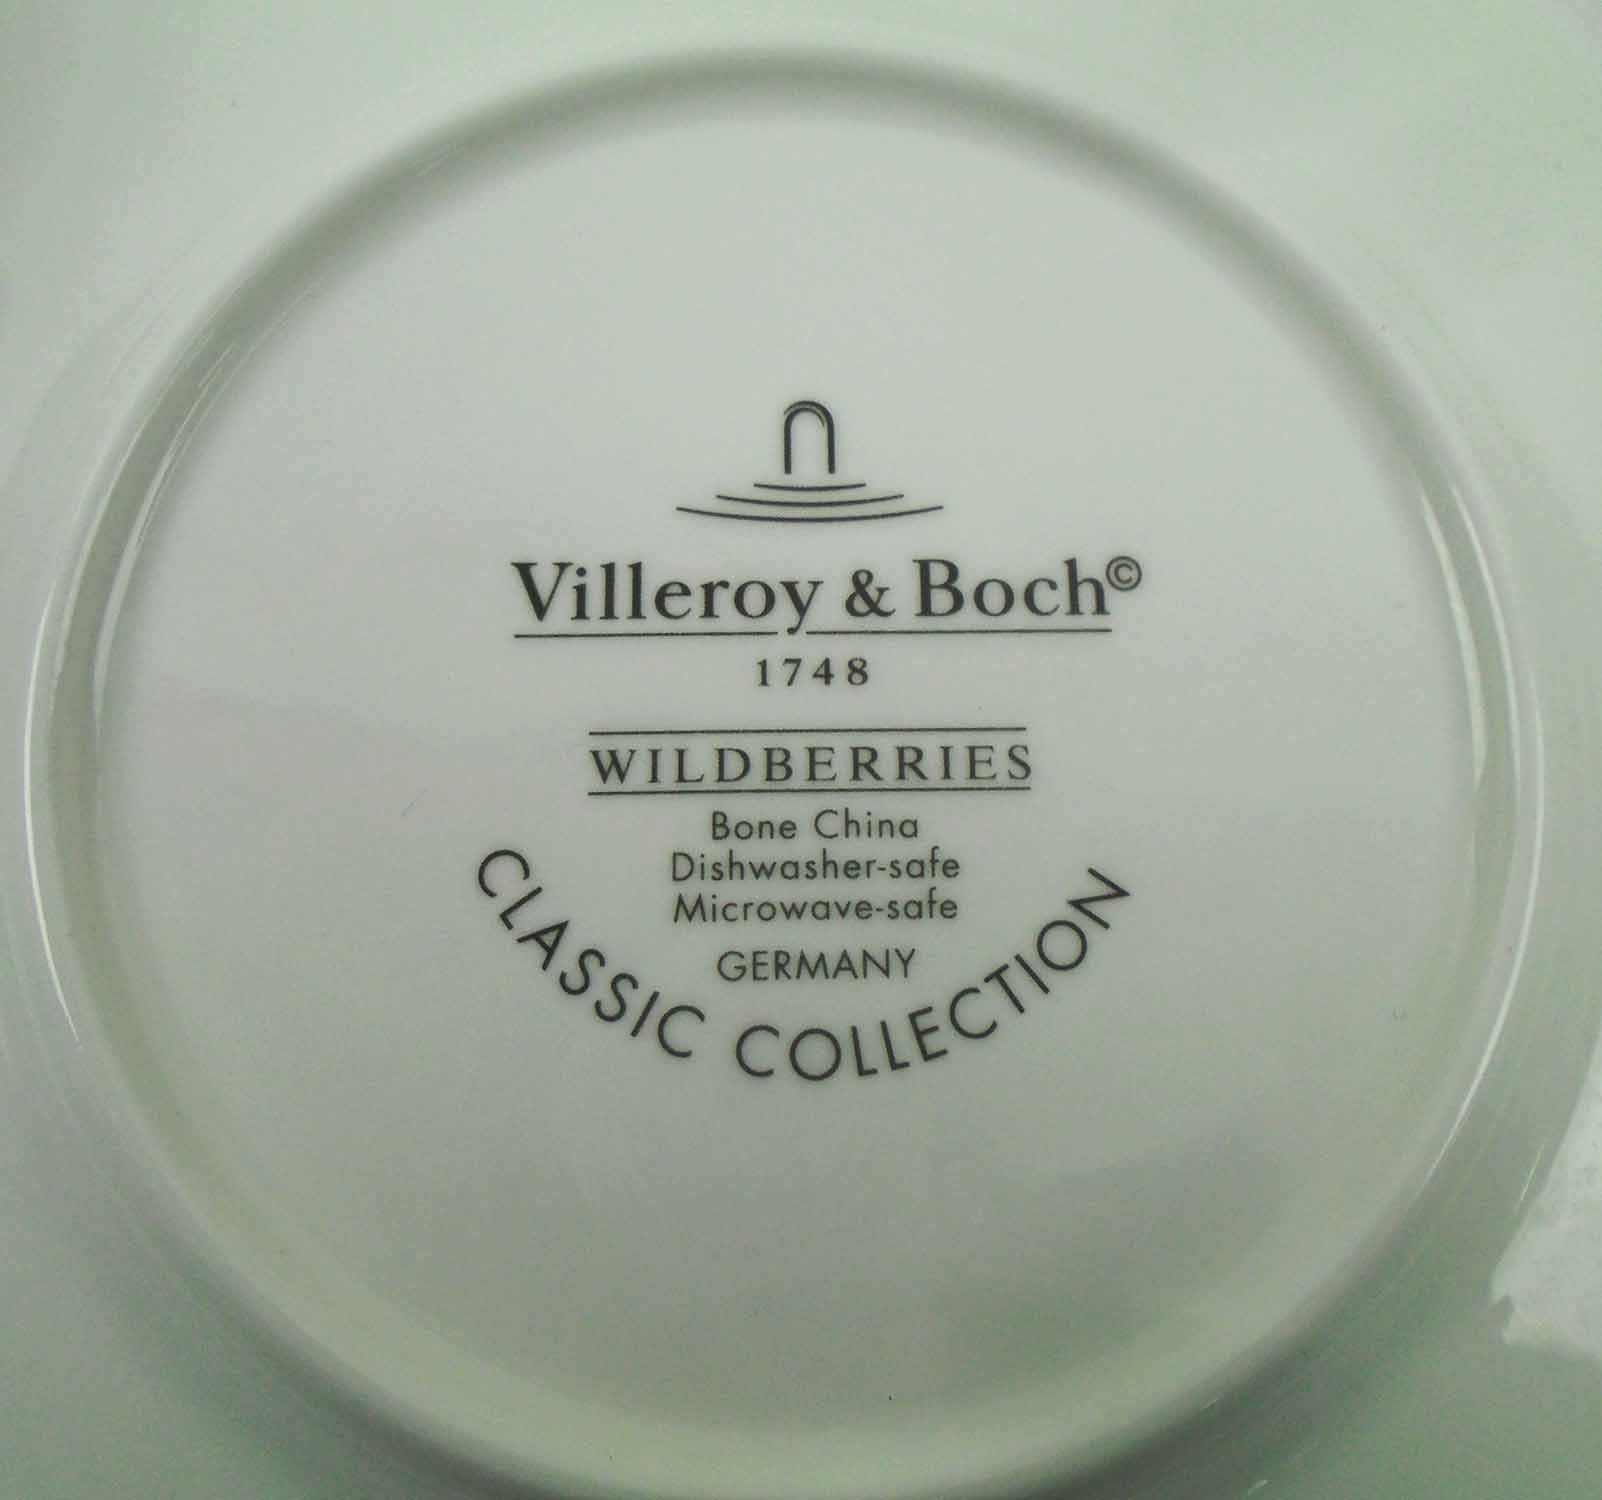 Villeroy & Boch, Wildberries